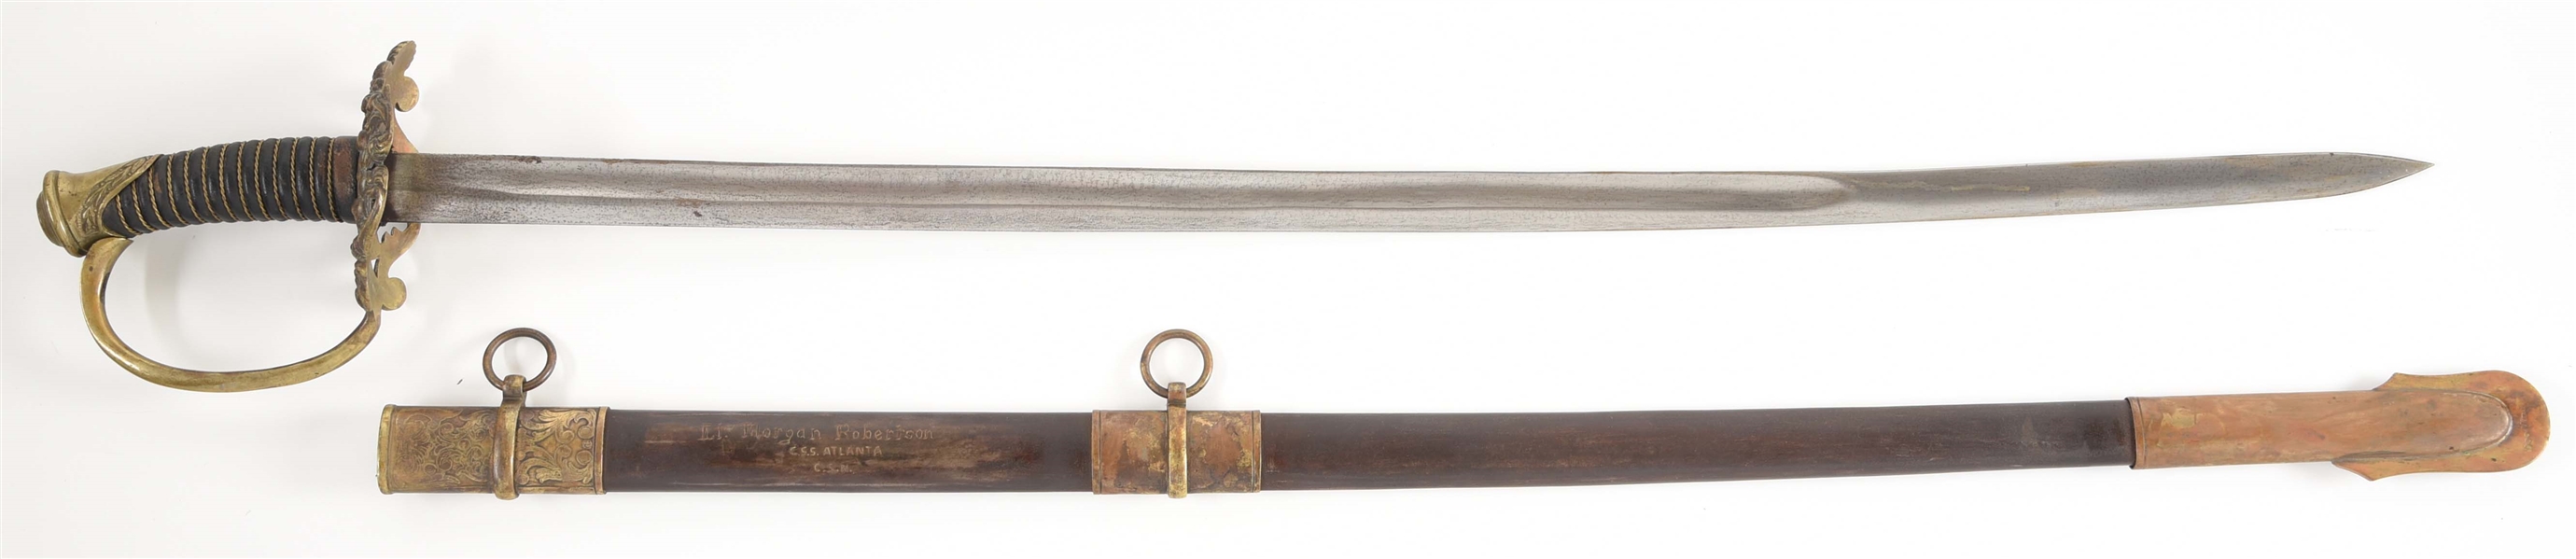 CIVIL WAR CONFEDERATE REENACTOR CSS ATLANTA PRESENTATION SWORD.